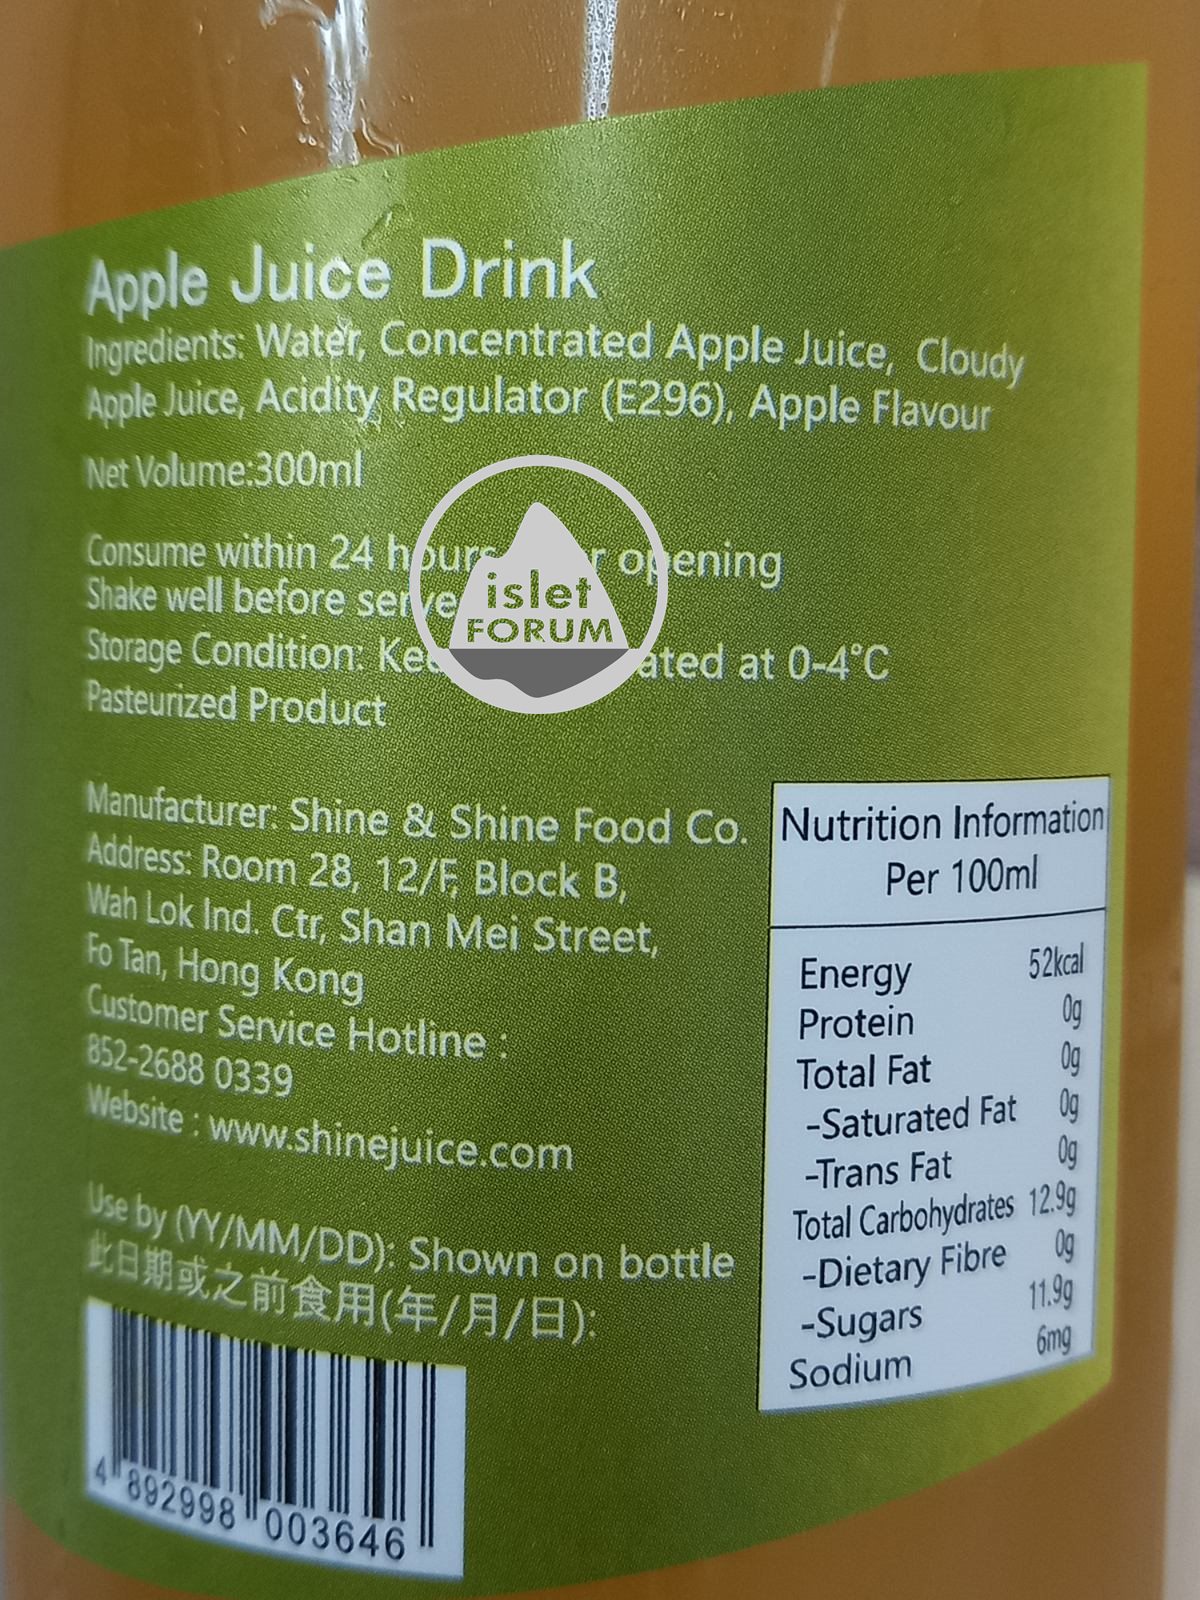 Apple Juice Drink (1).jpg